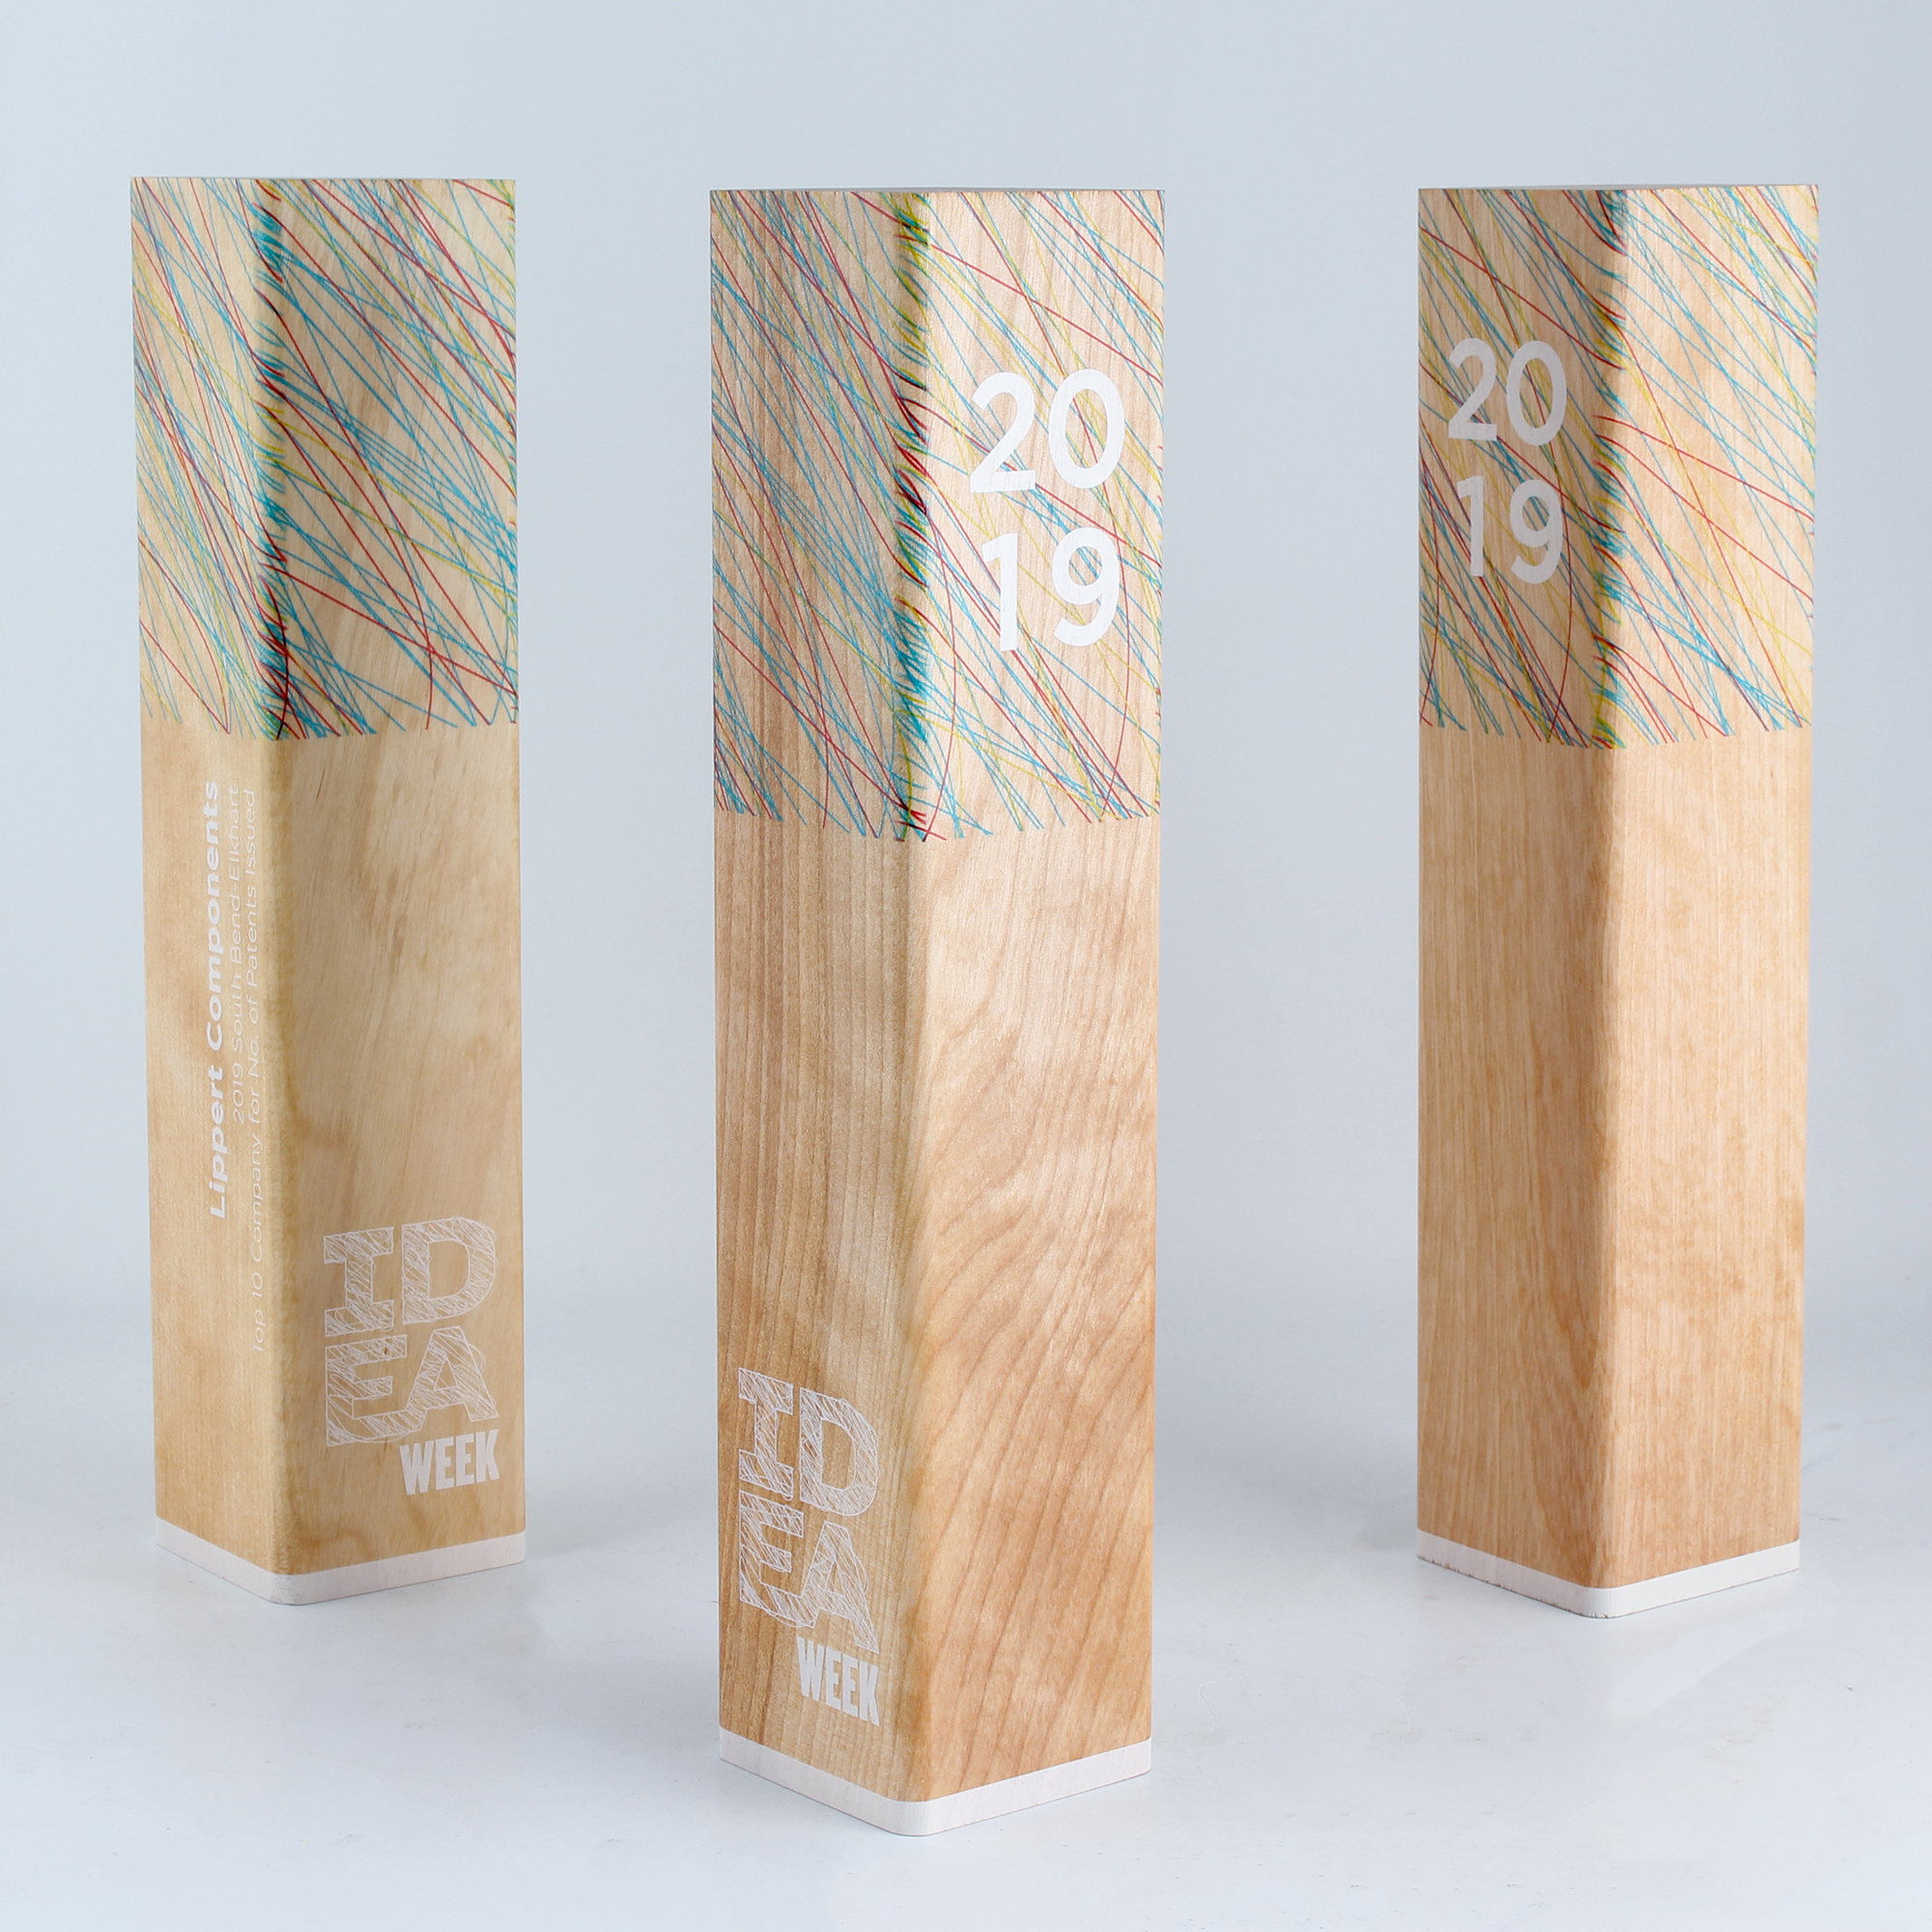 IDEA week custom eco friendly wood awards. 